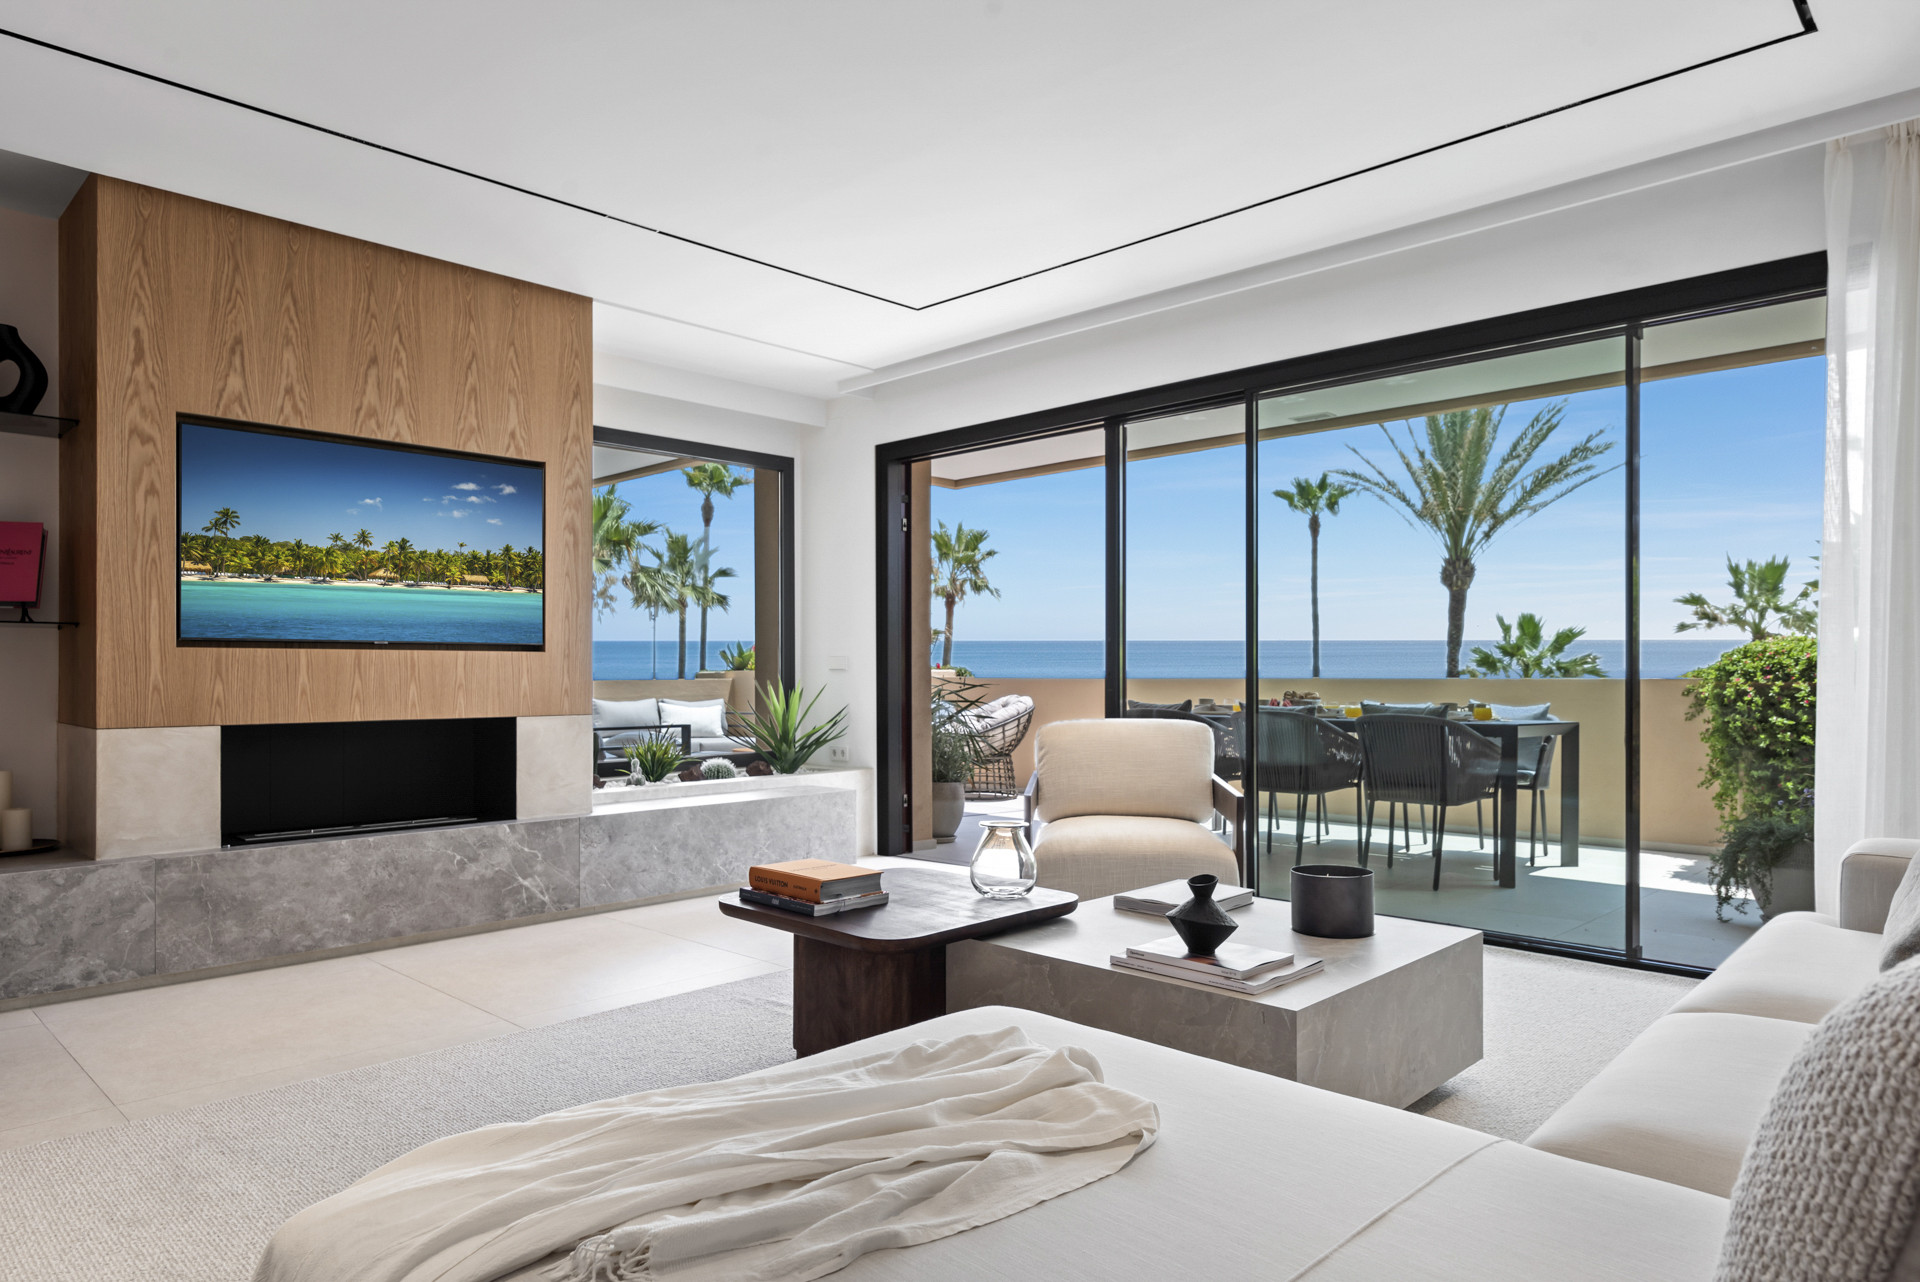 Increíblemente apartamento de diseño moderno con orientación suroeste e impresionantes vistas panorámicas al mar